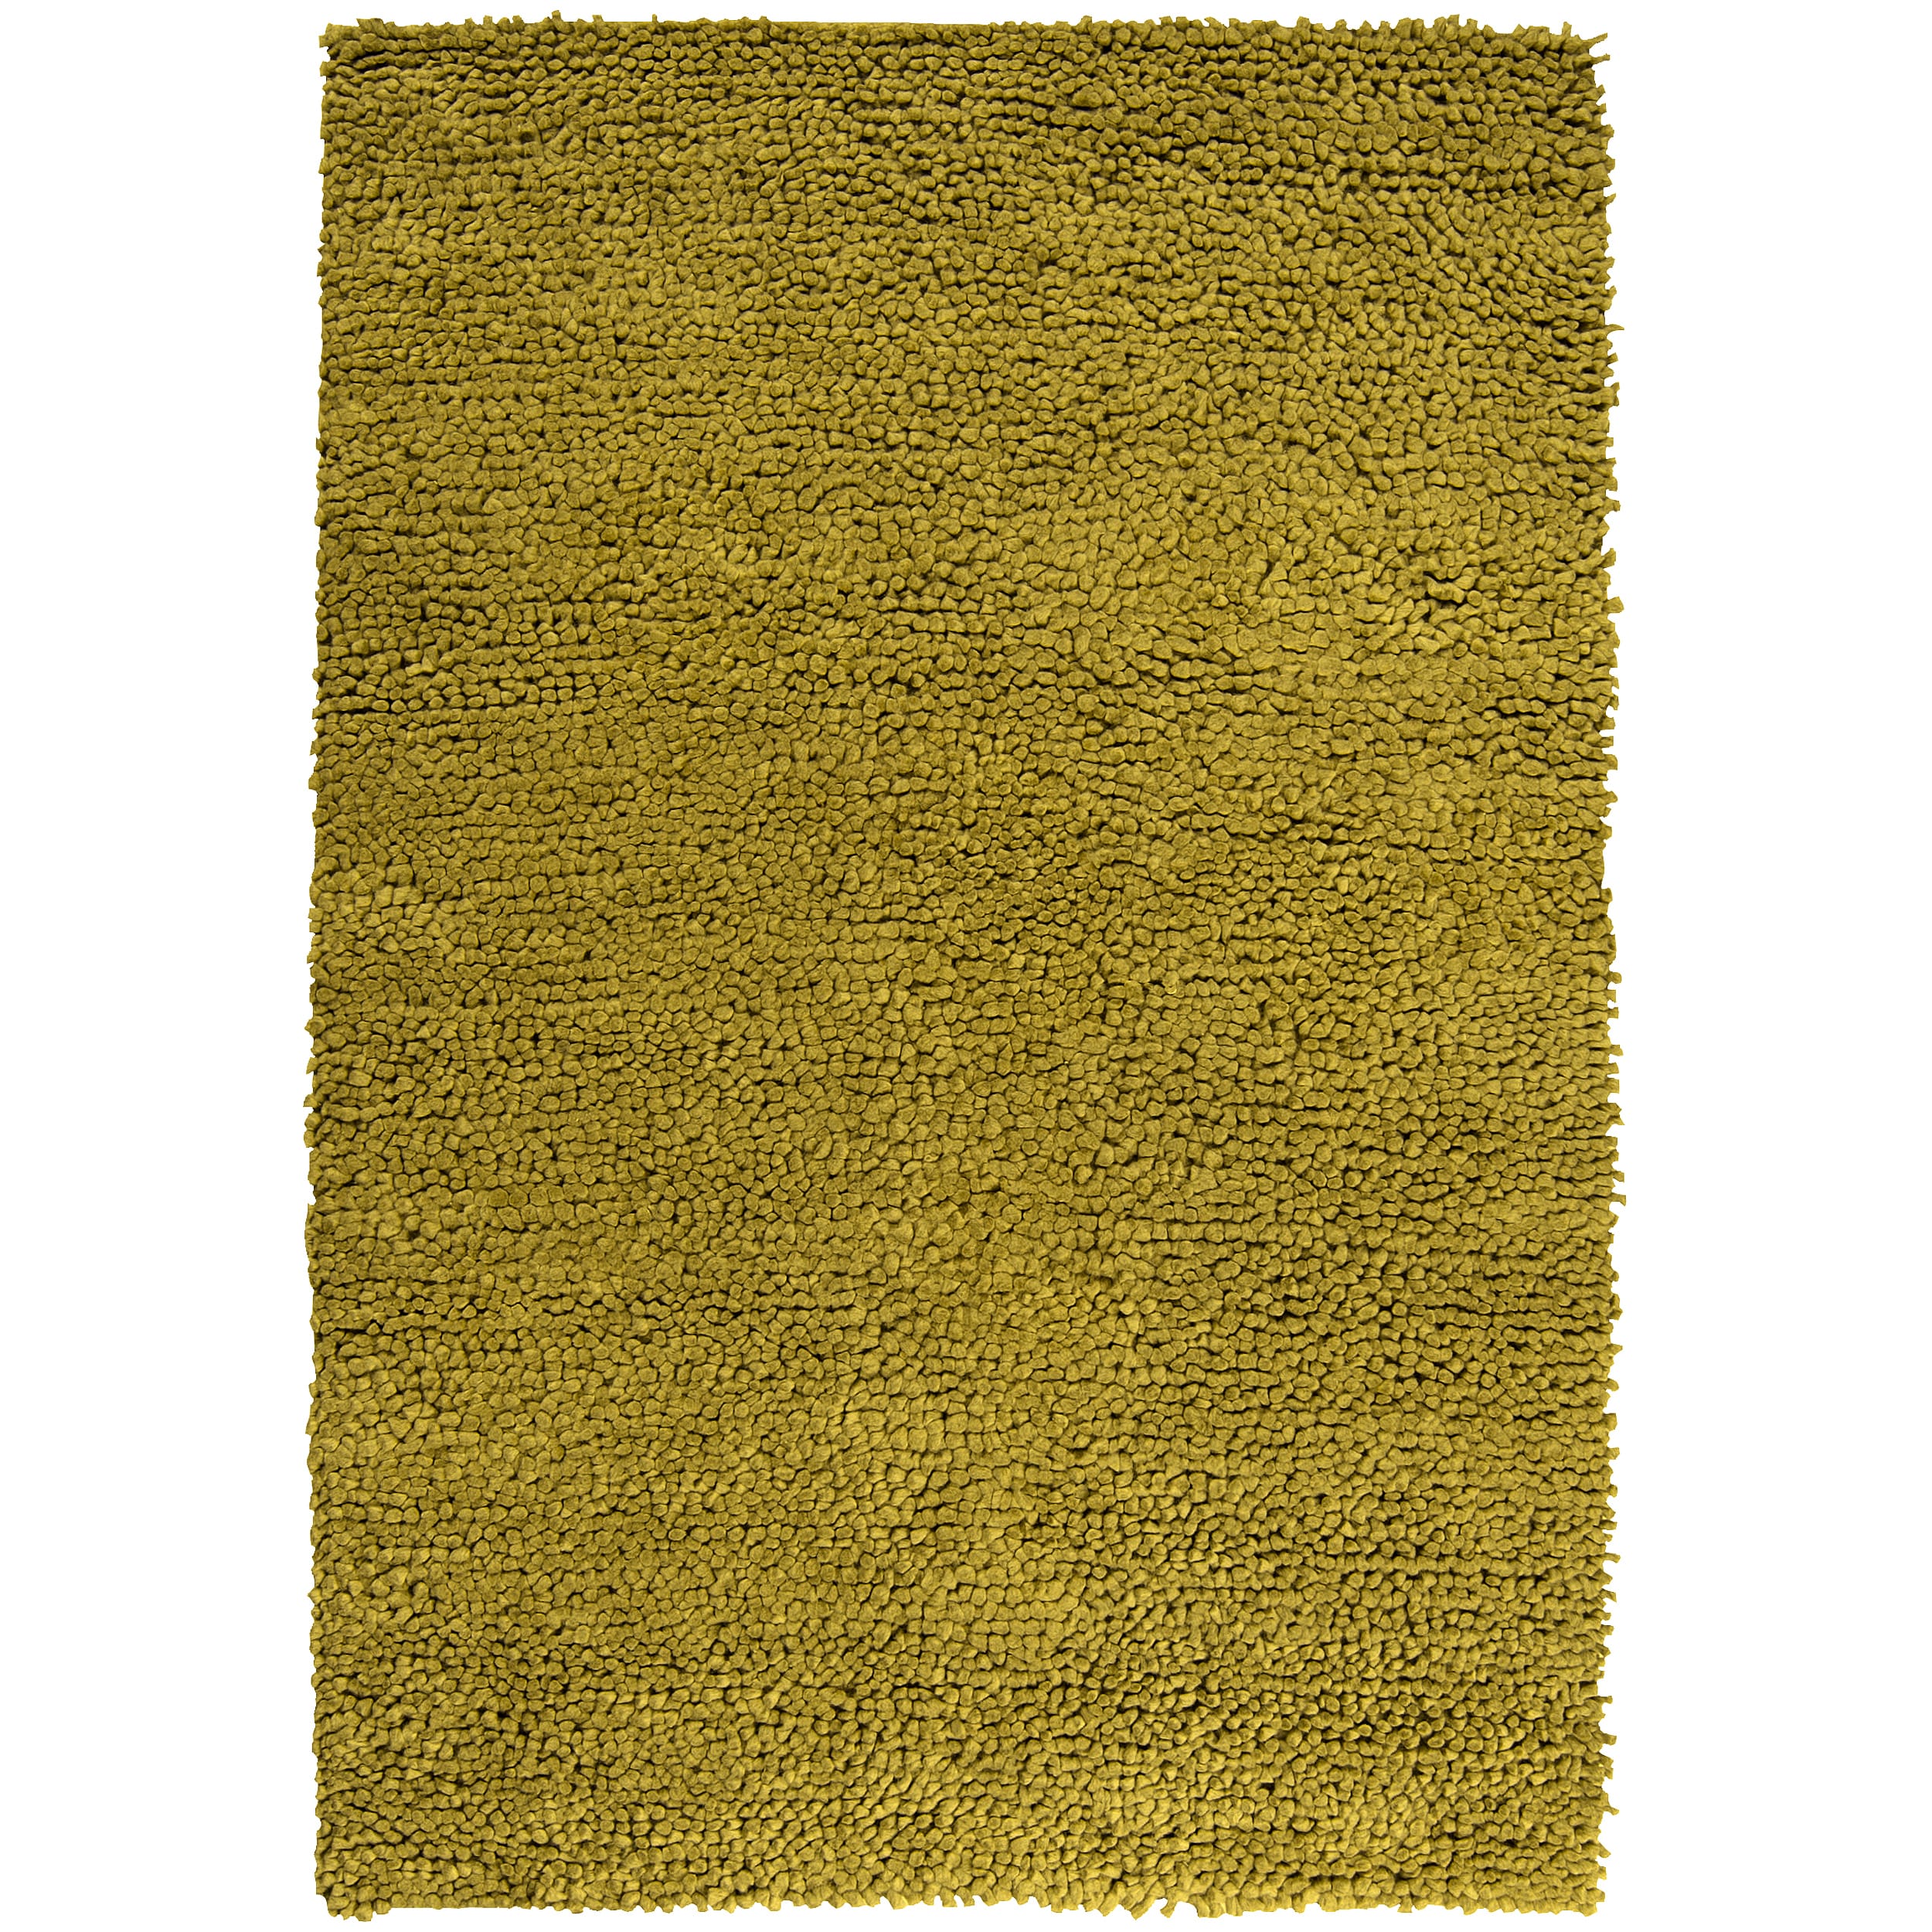 Surya Carpet, Inc. Hand woven New Zealand Felted Wool Plush Shag Area Rug (8 X 10) Beige Size 8 x 10